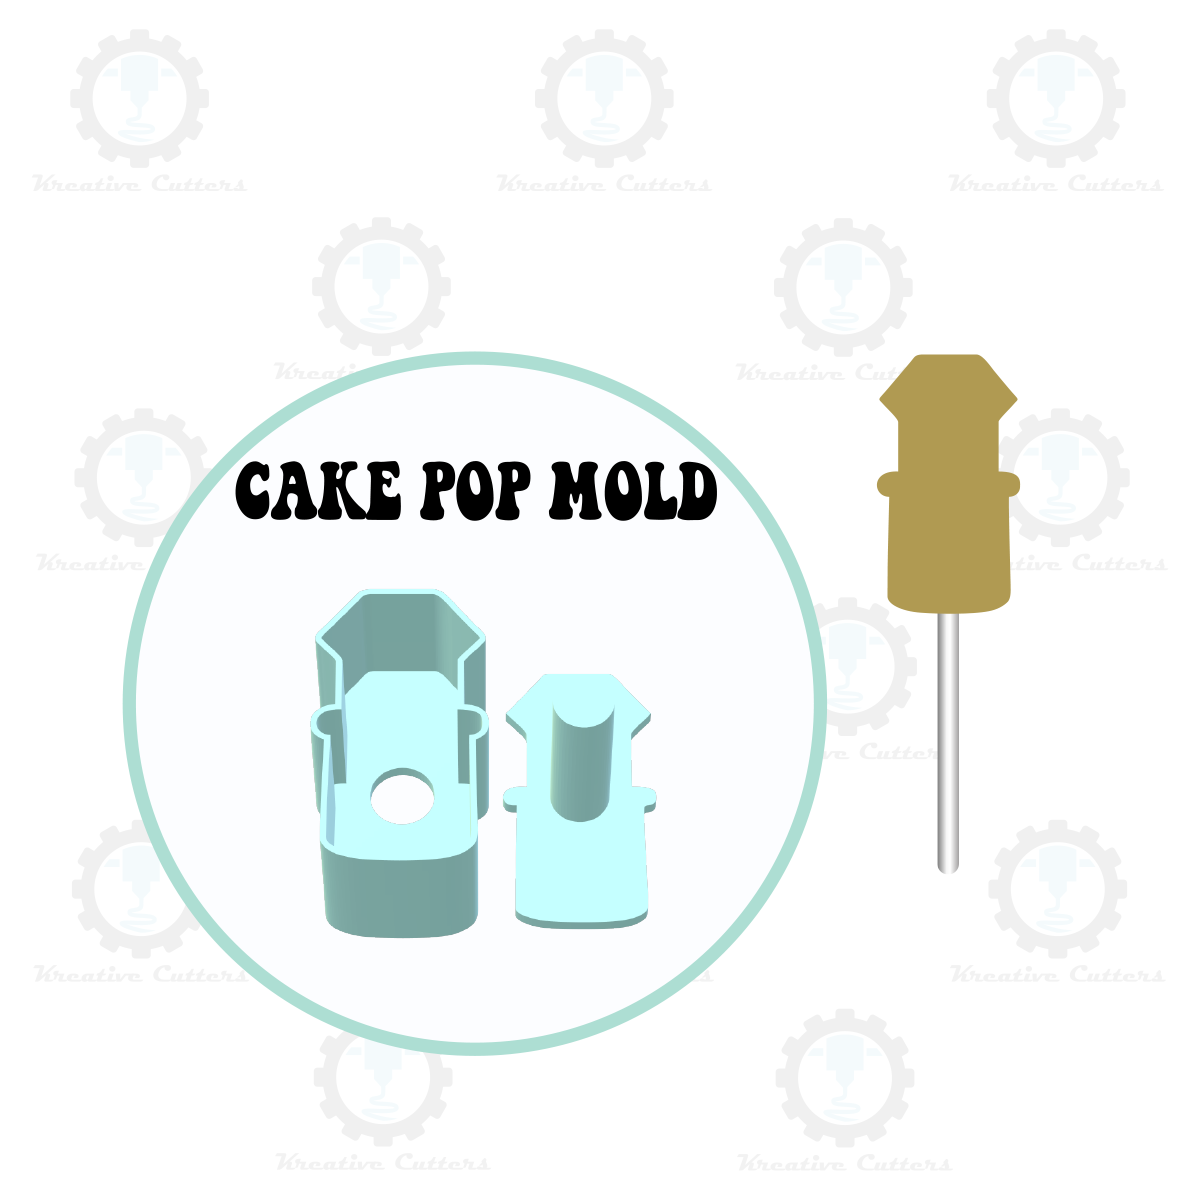 Dads Tools Cake Pop Molds | Hammer, Hacksaw, Screwdriver